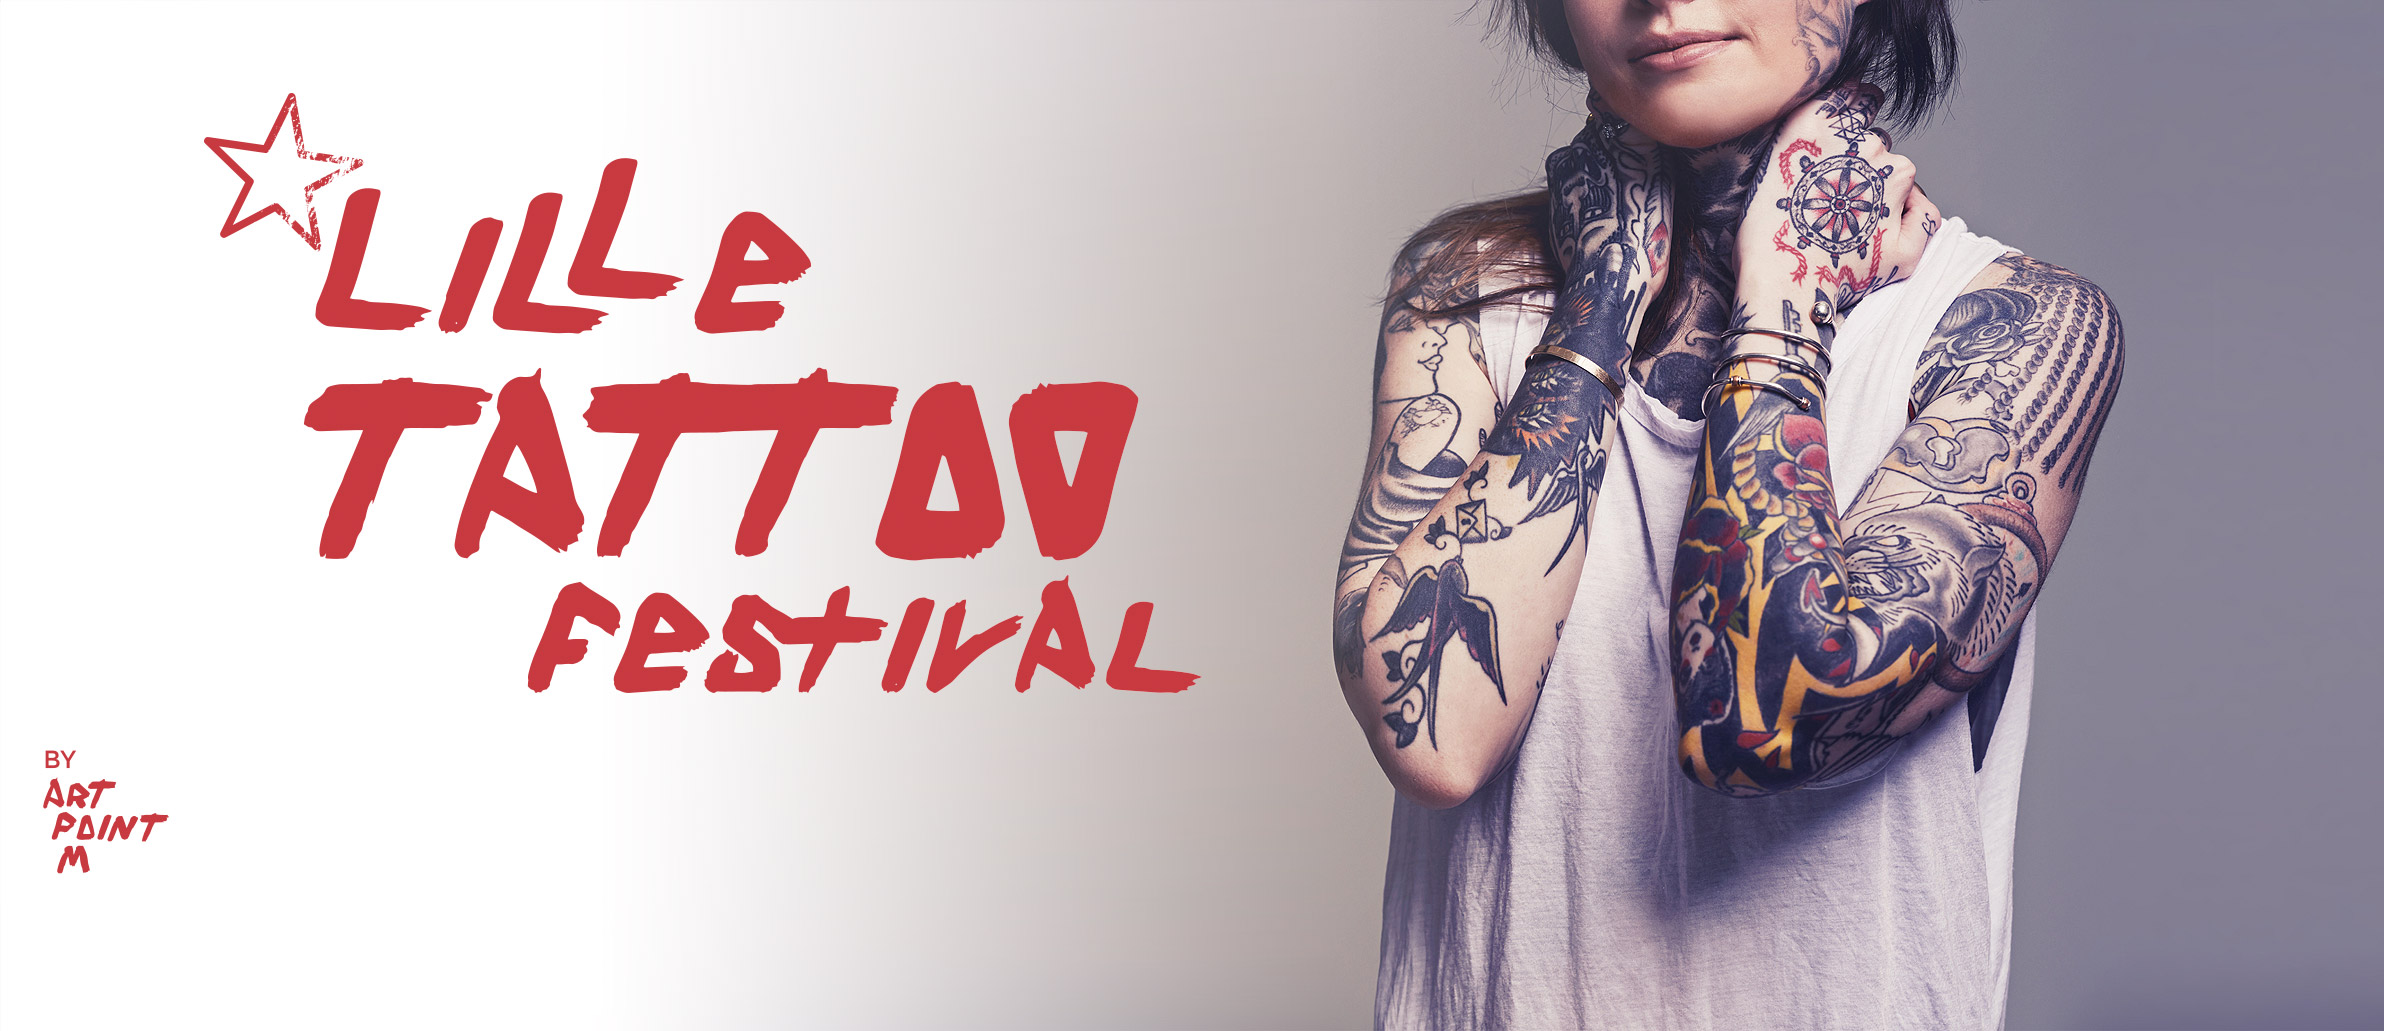 Lille Tattoo Festival 